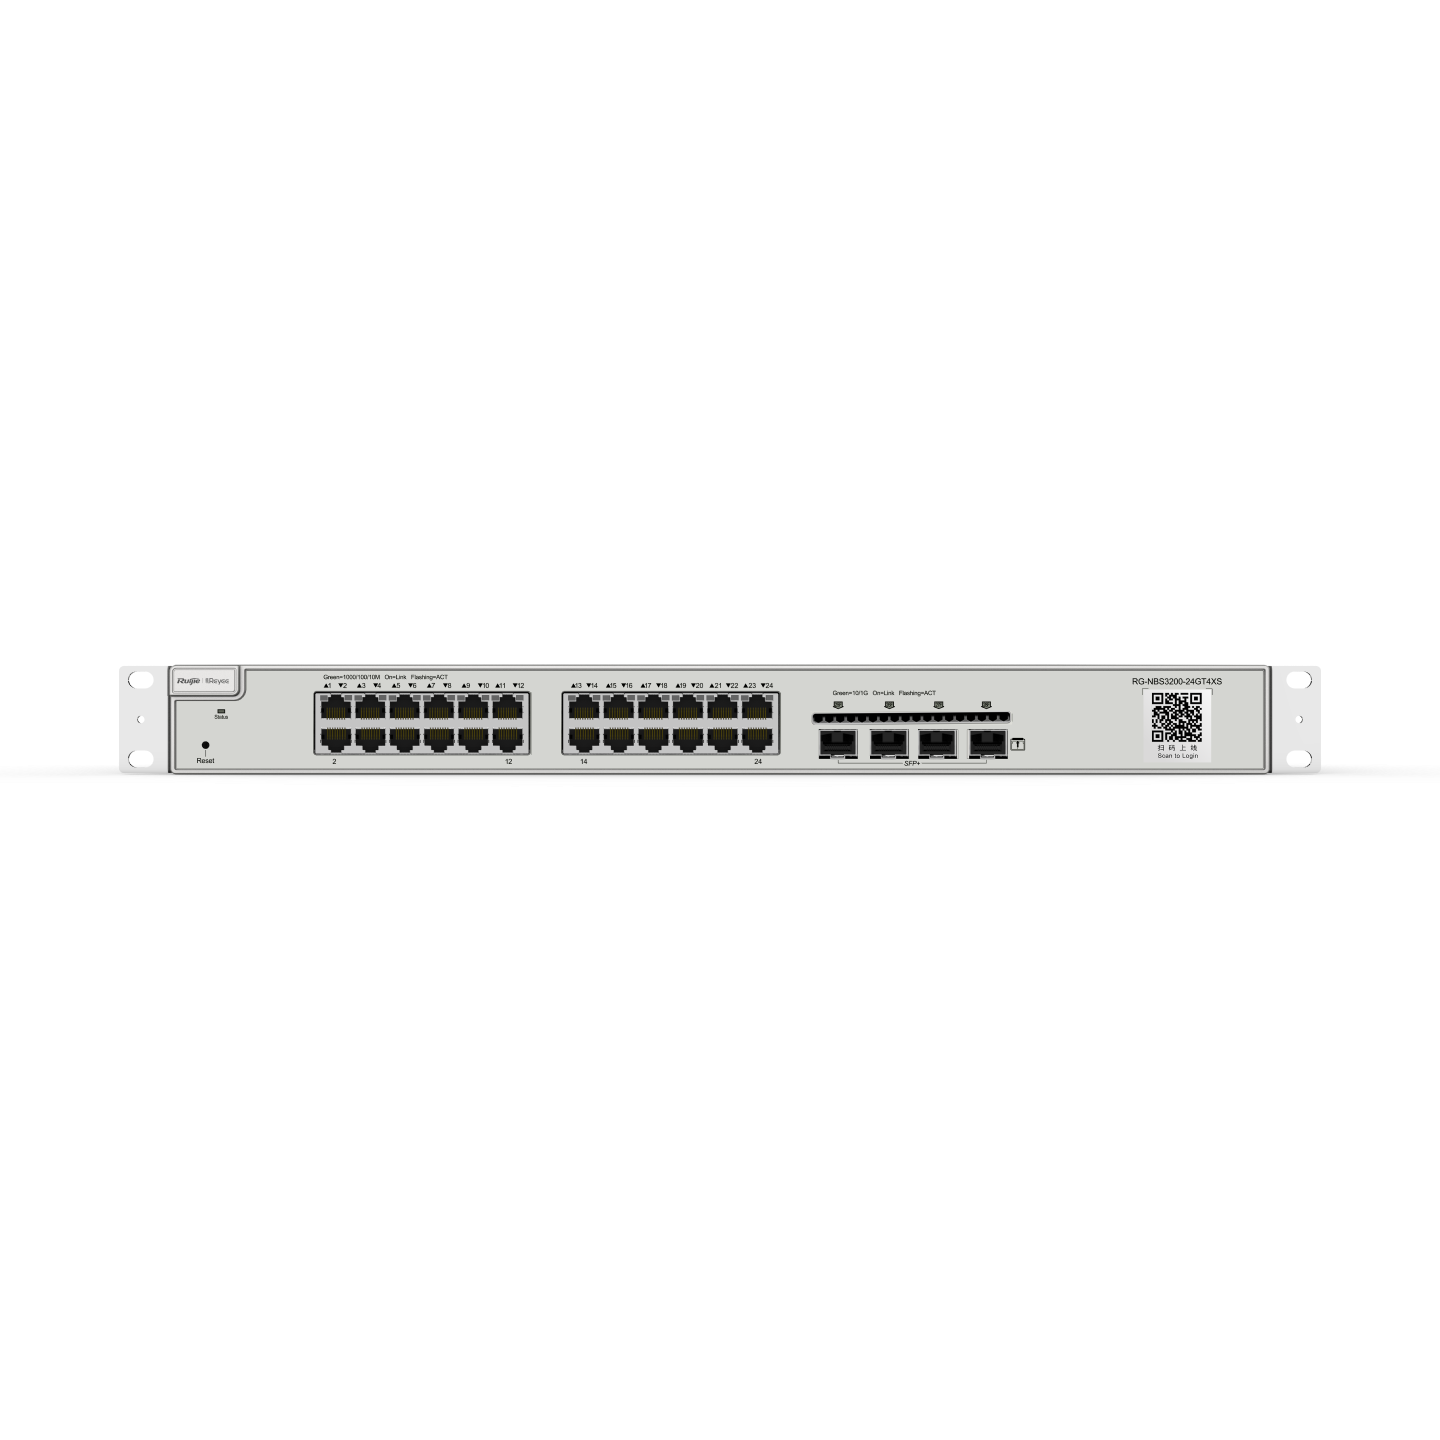 RG-NBS3200-24GT4XS, 24-port Gigabit Layer 2-verwalteter Switch, 4 * 10G Uplinks